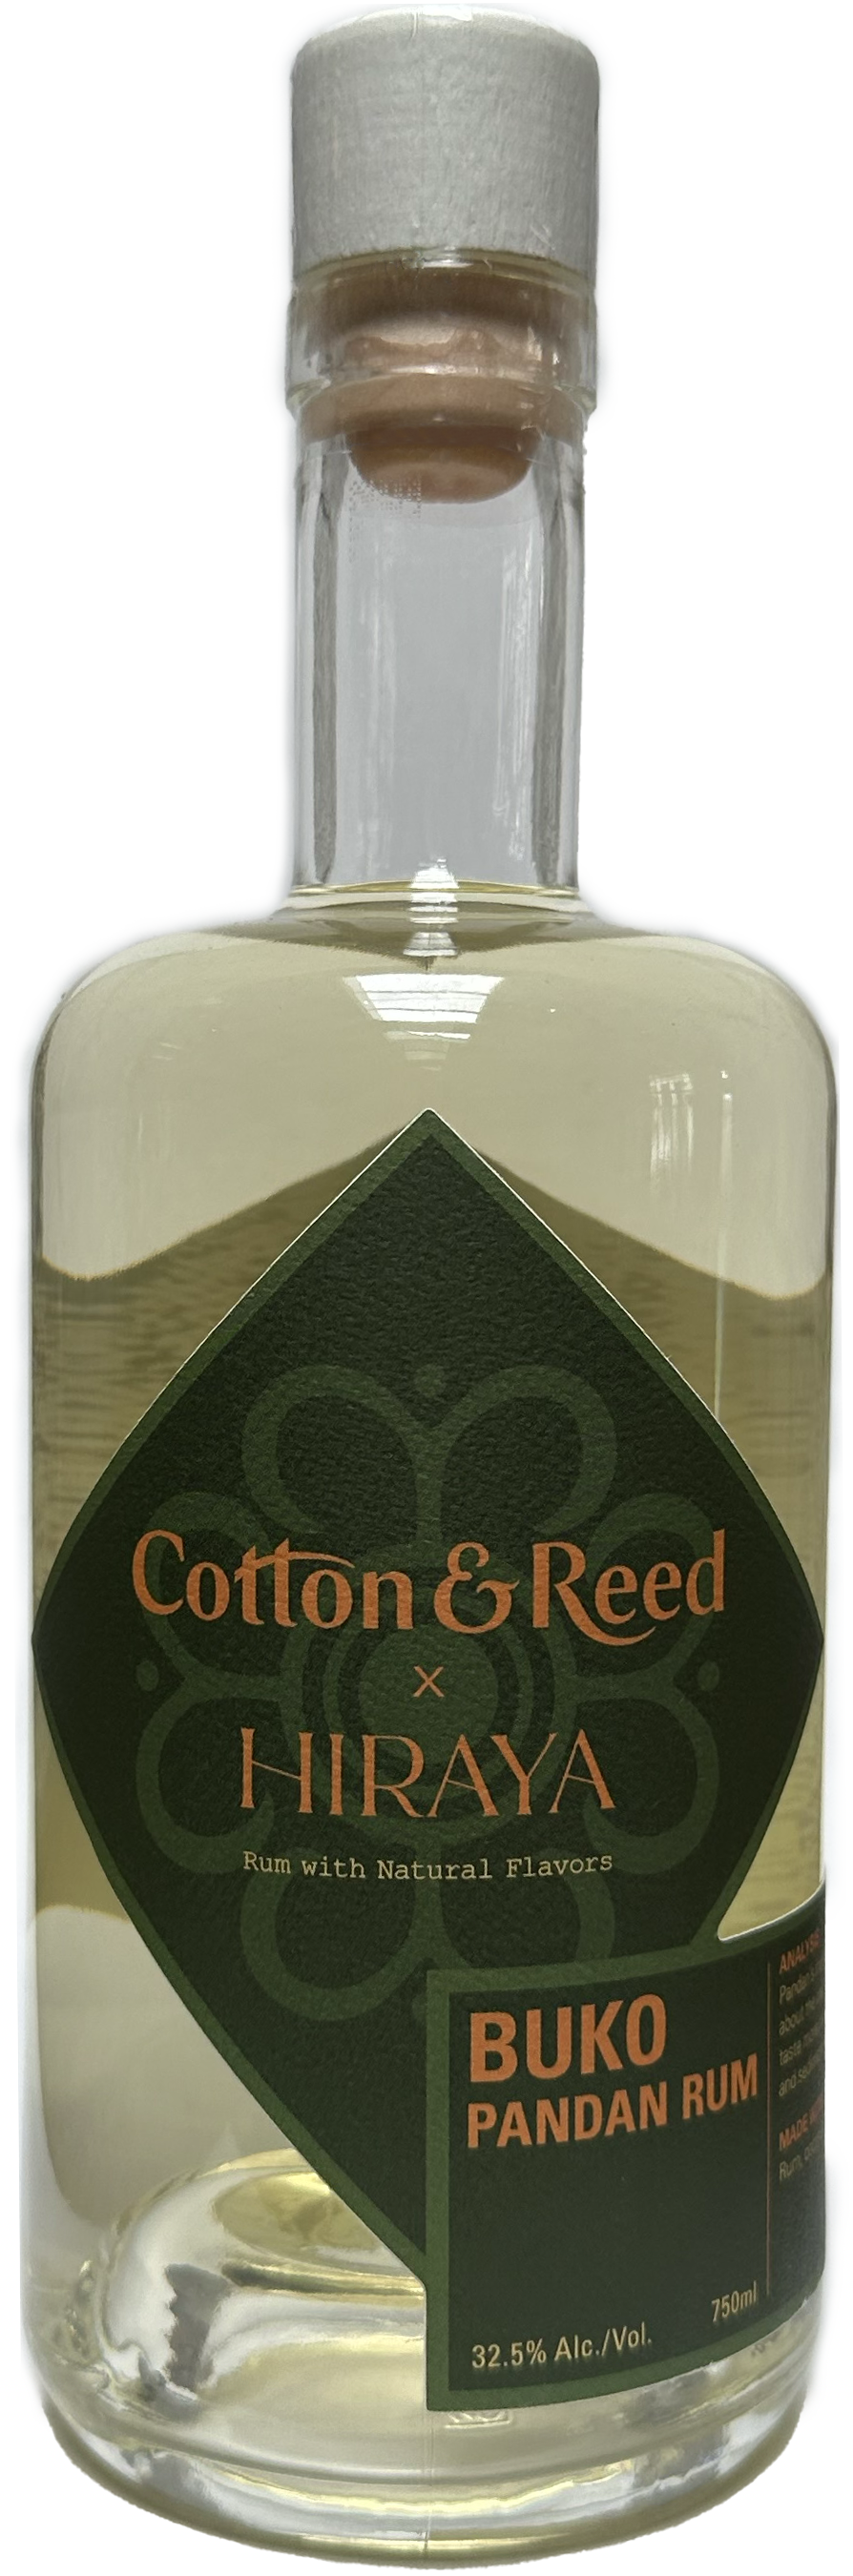 Cotton & Reed Buko Pandan Rum